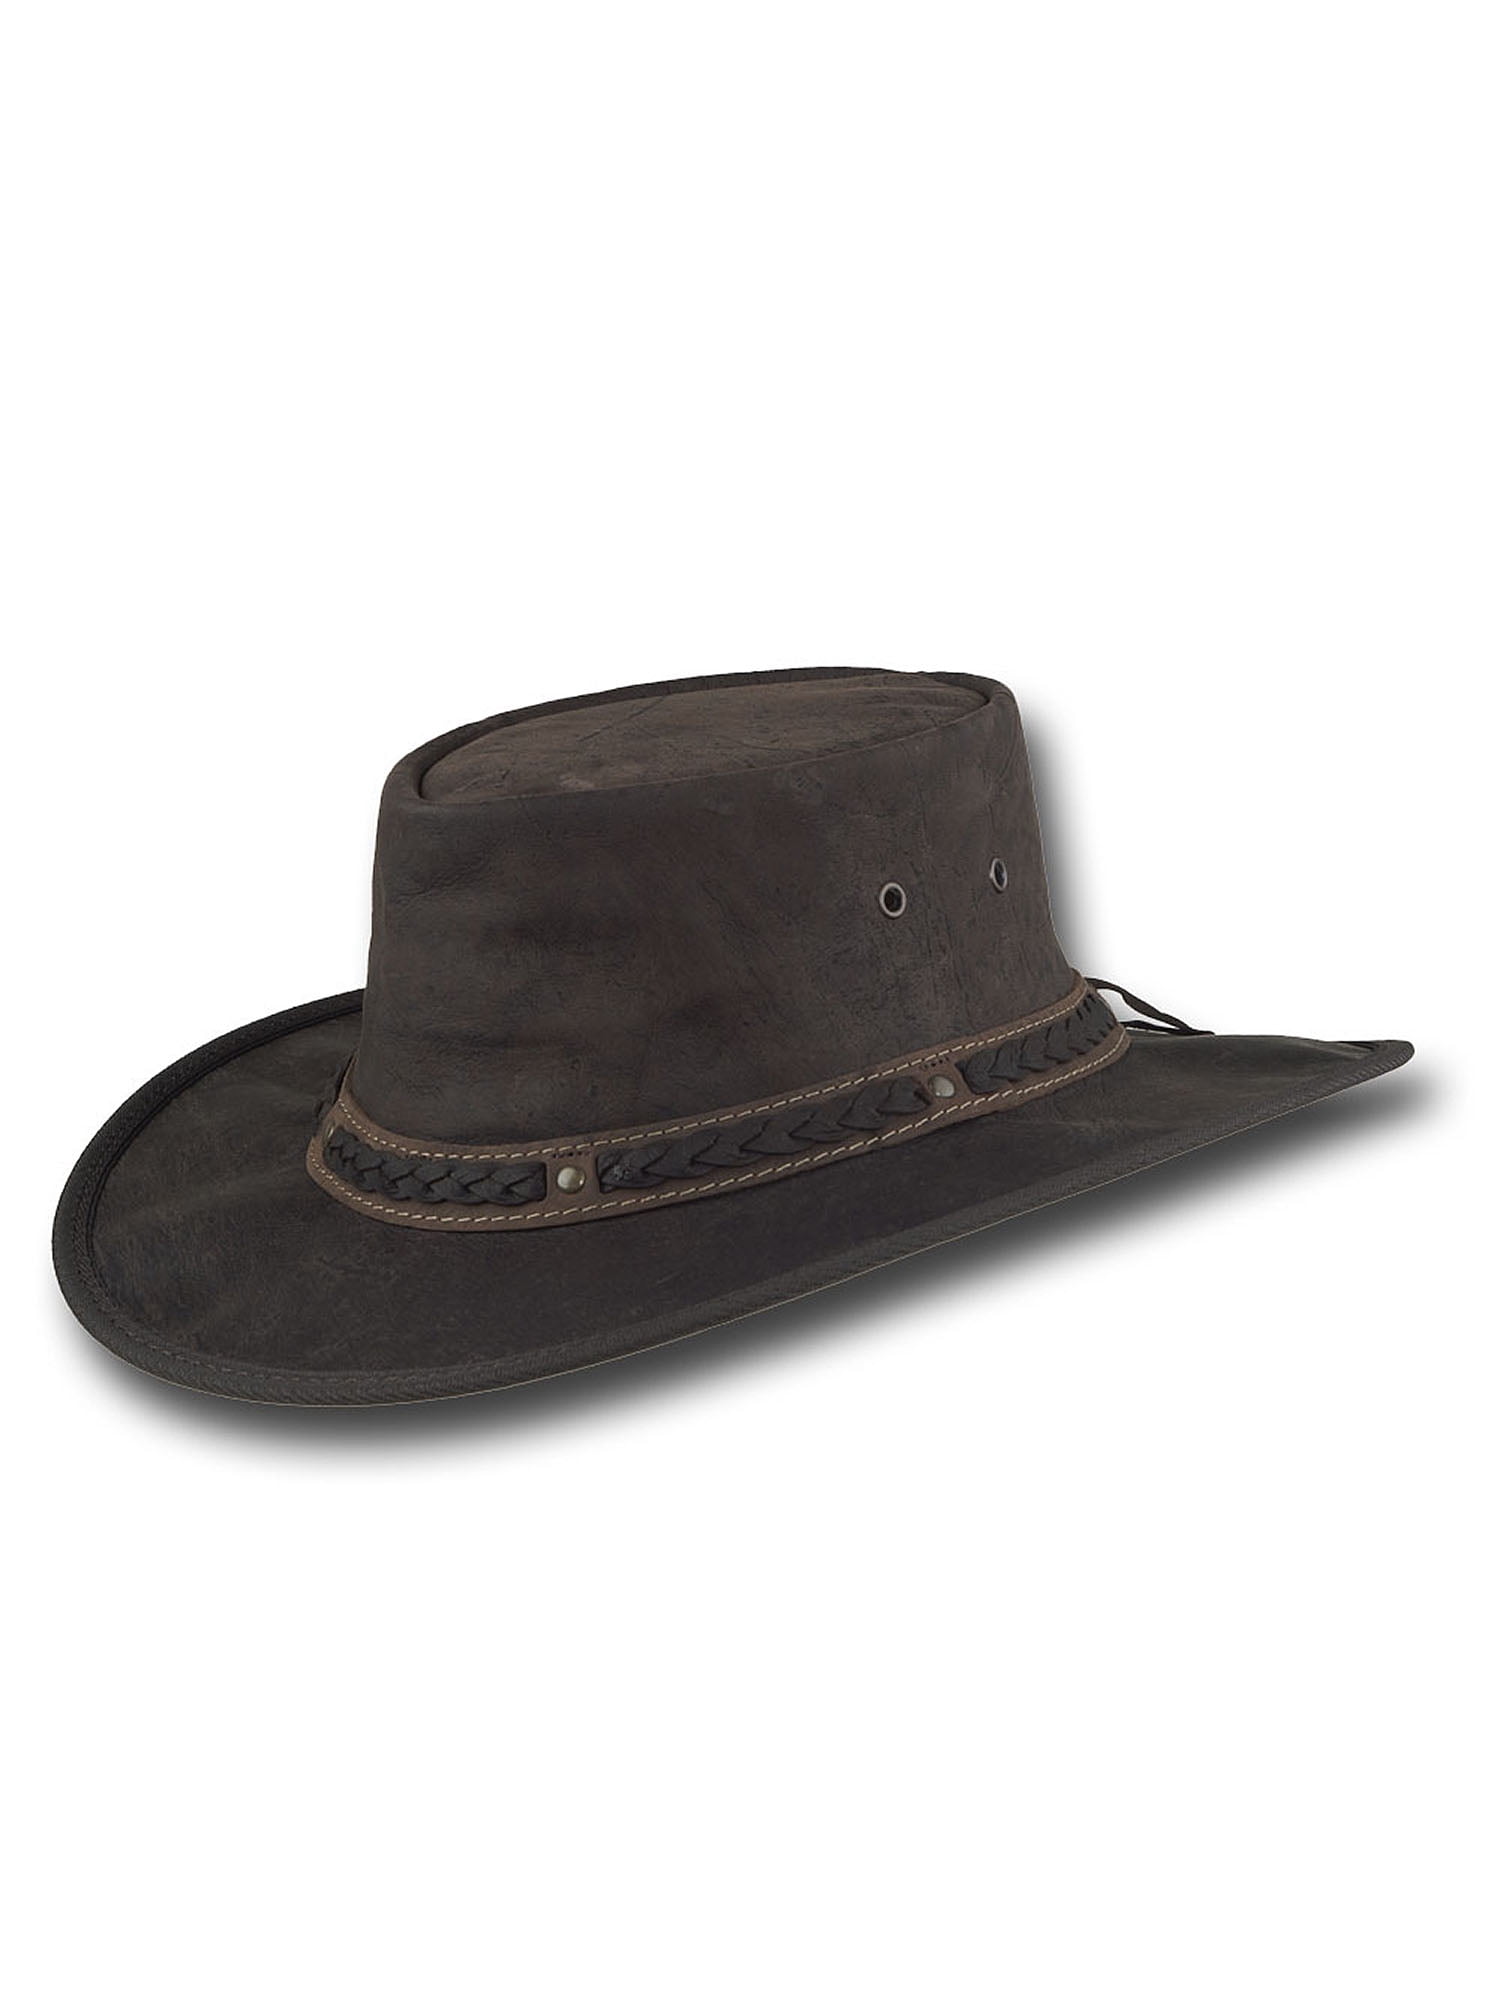 Barmah Hats Stonewash Kangaroo Leather Hat - Item 1018 